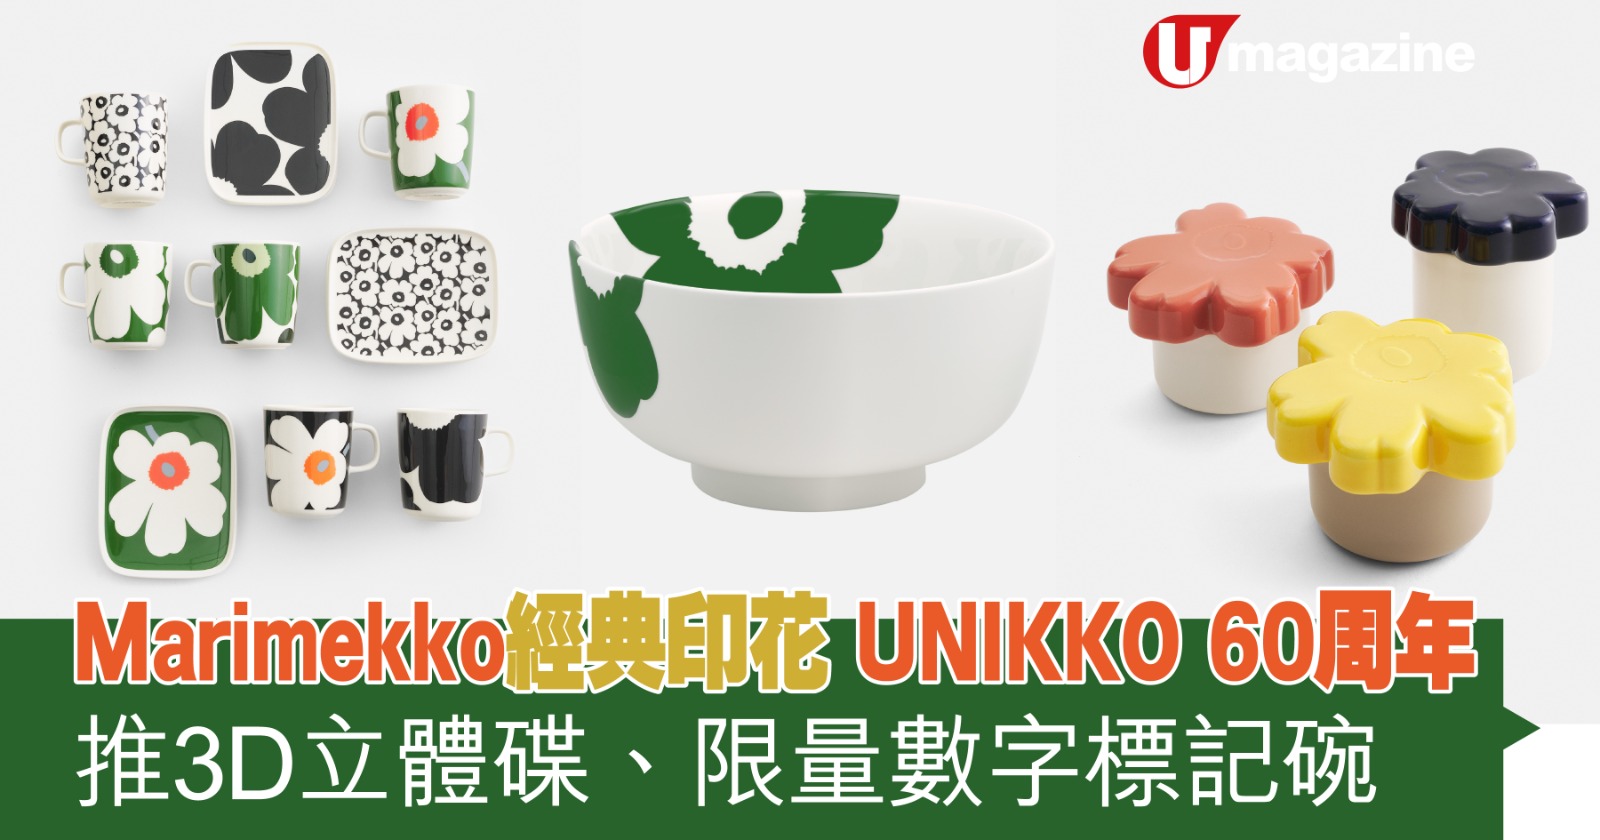 Marimekko經典印花UNIKKO 60周年 3D立體碟/限量數字標記碗